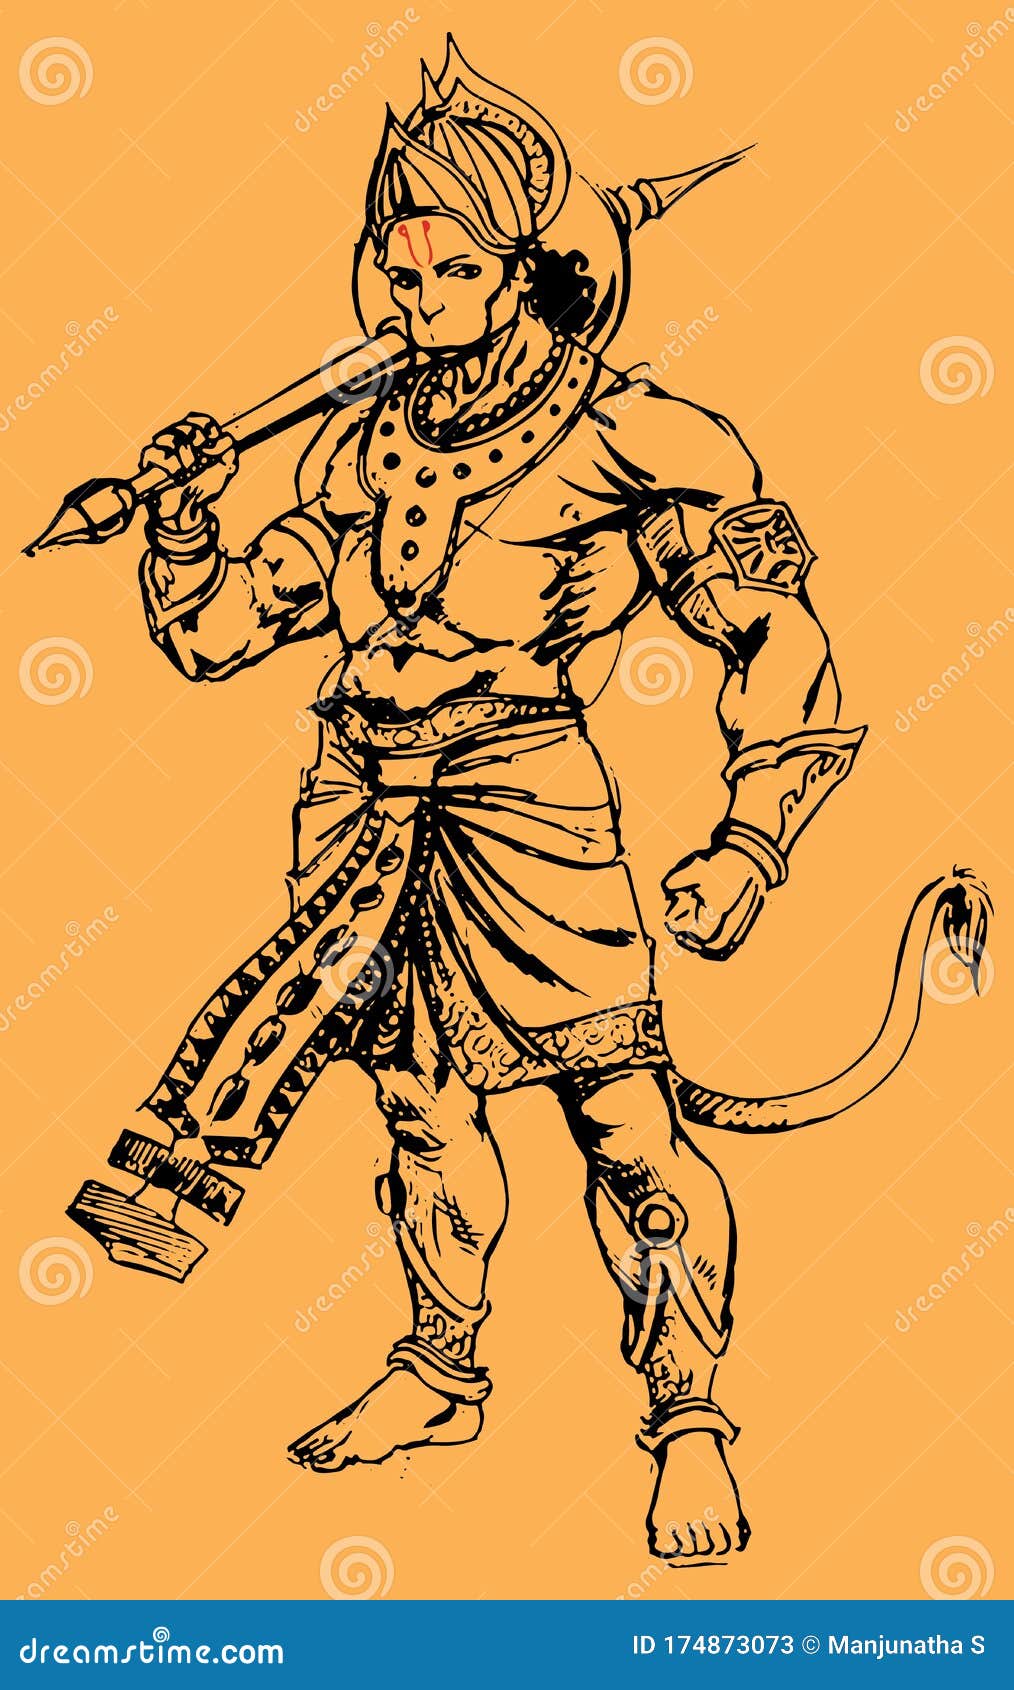 Hanuman ji drawing sketch - Other Hobbies - 1756818948-saigonsouth.com.vn